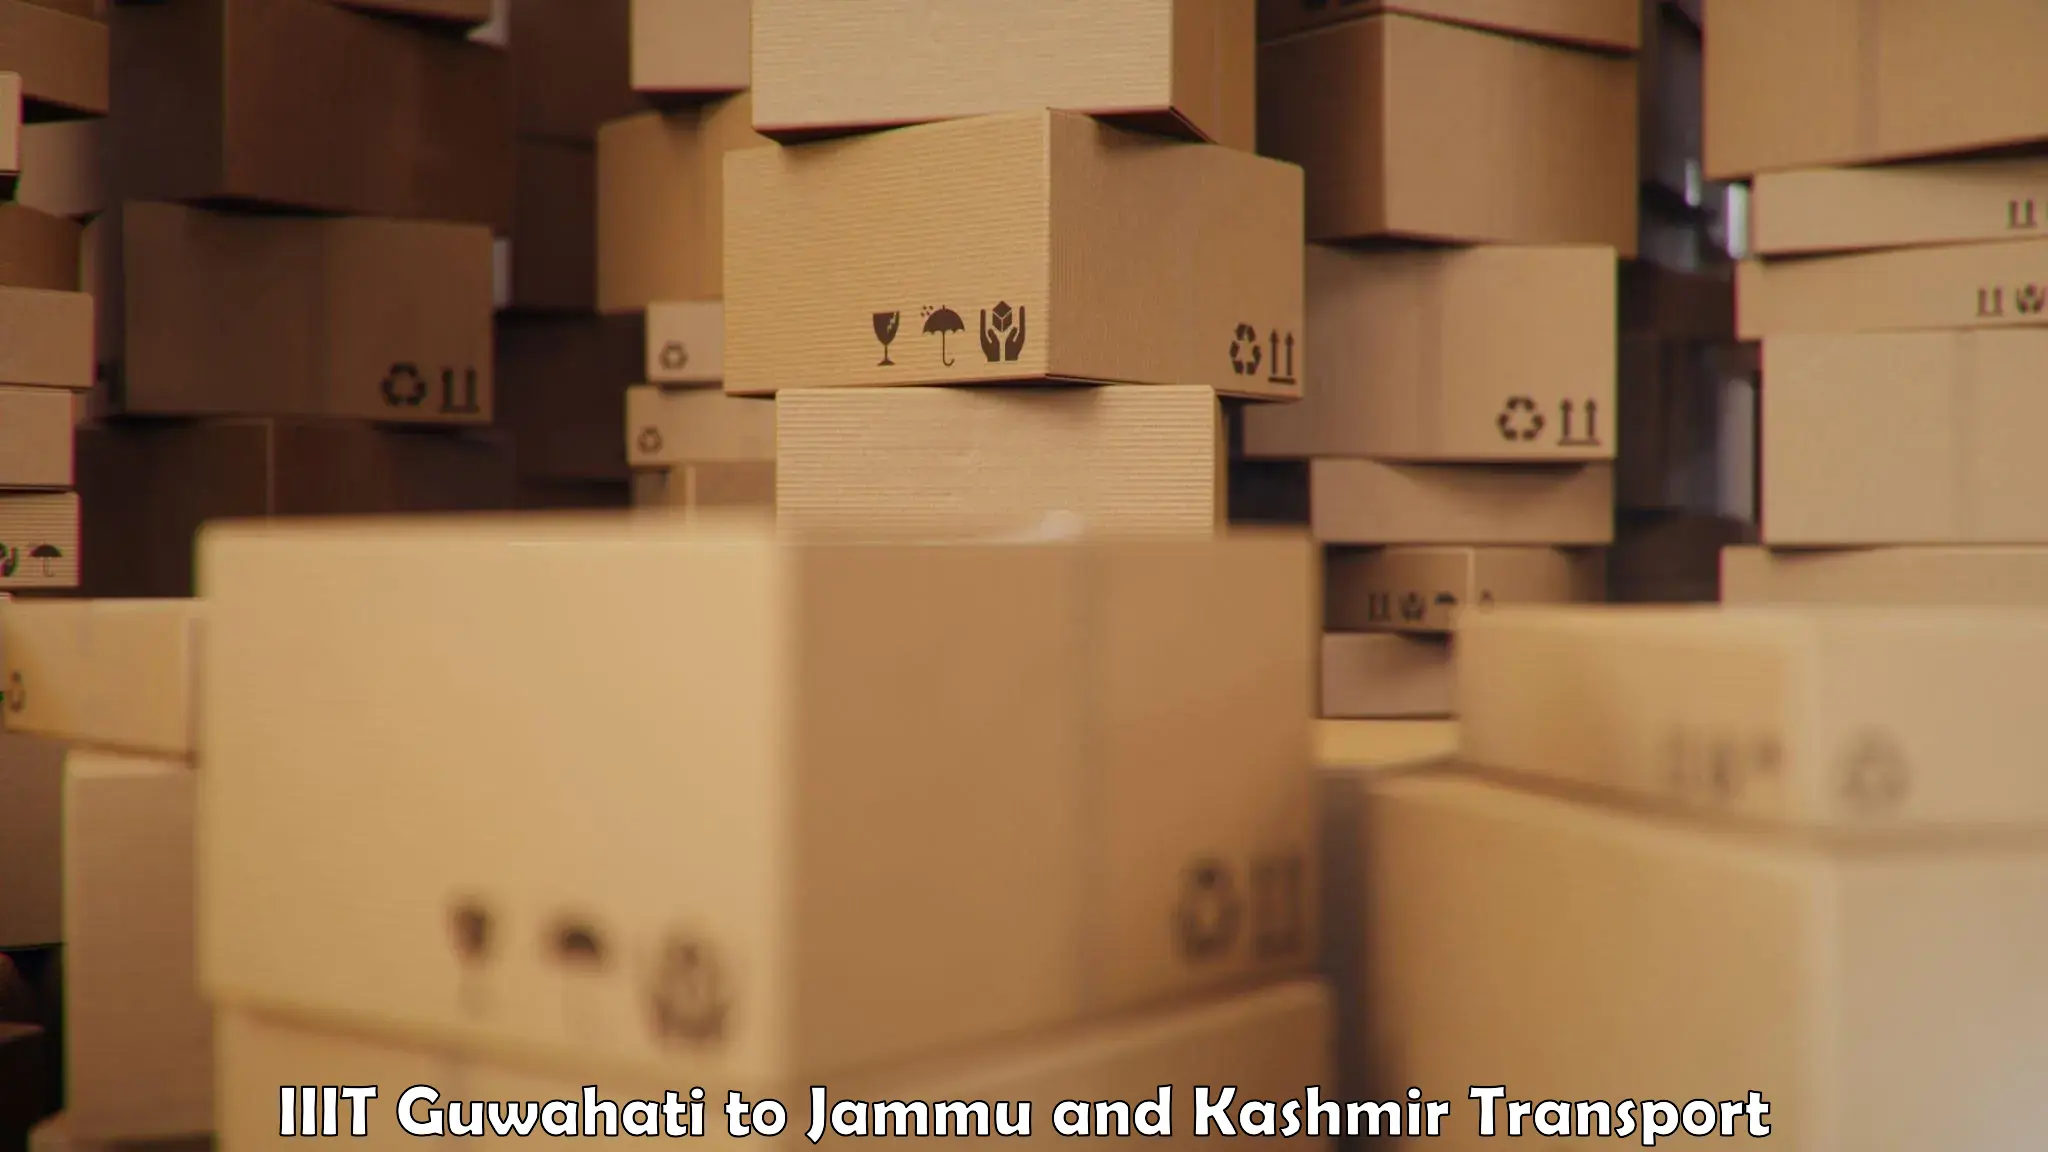 Cycle transportation service IIIT Guwahati to Jammu and Kashmir